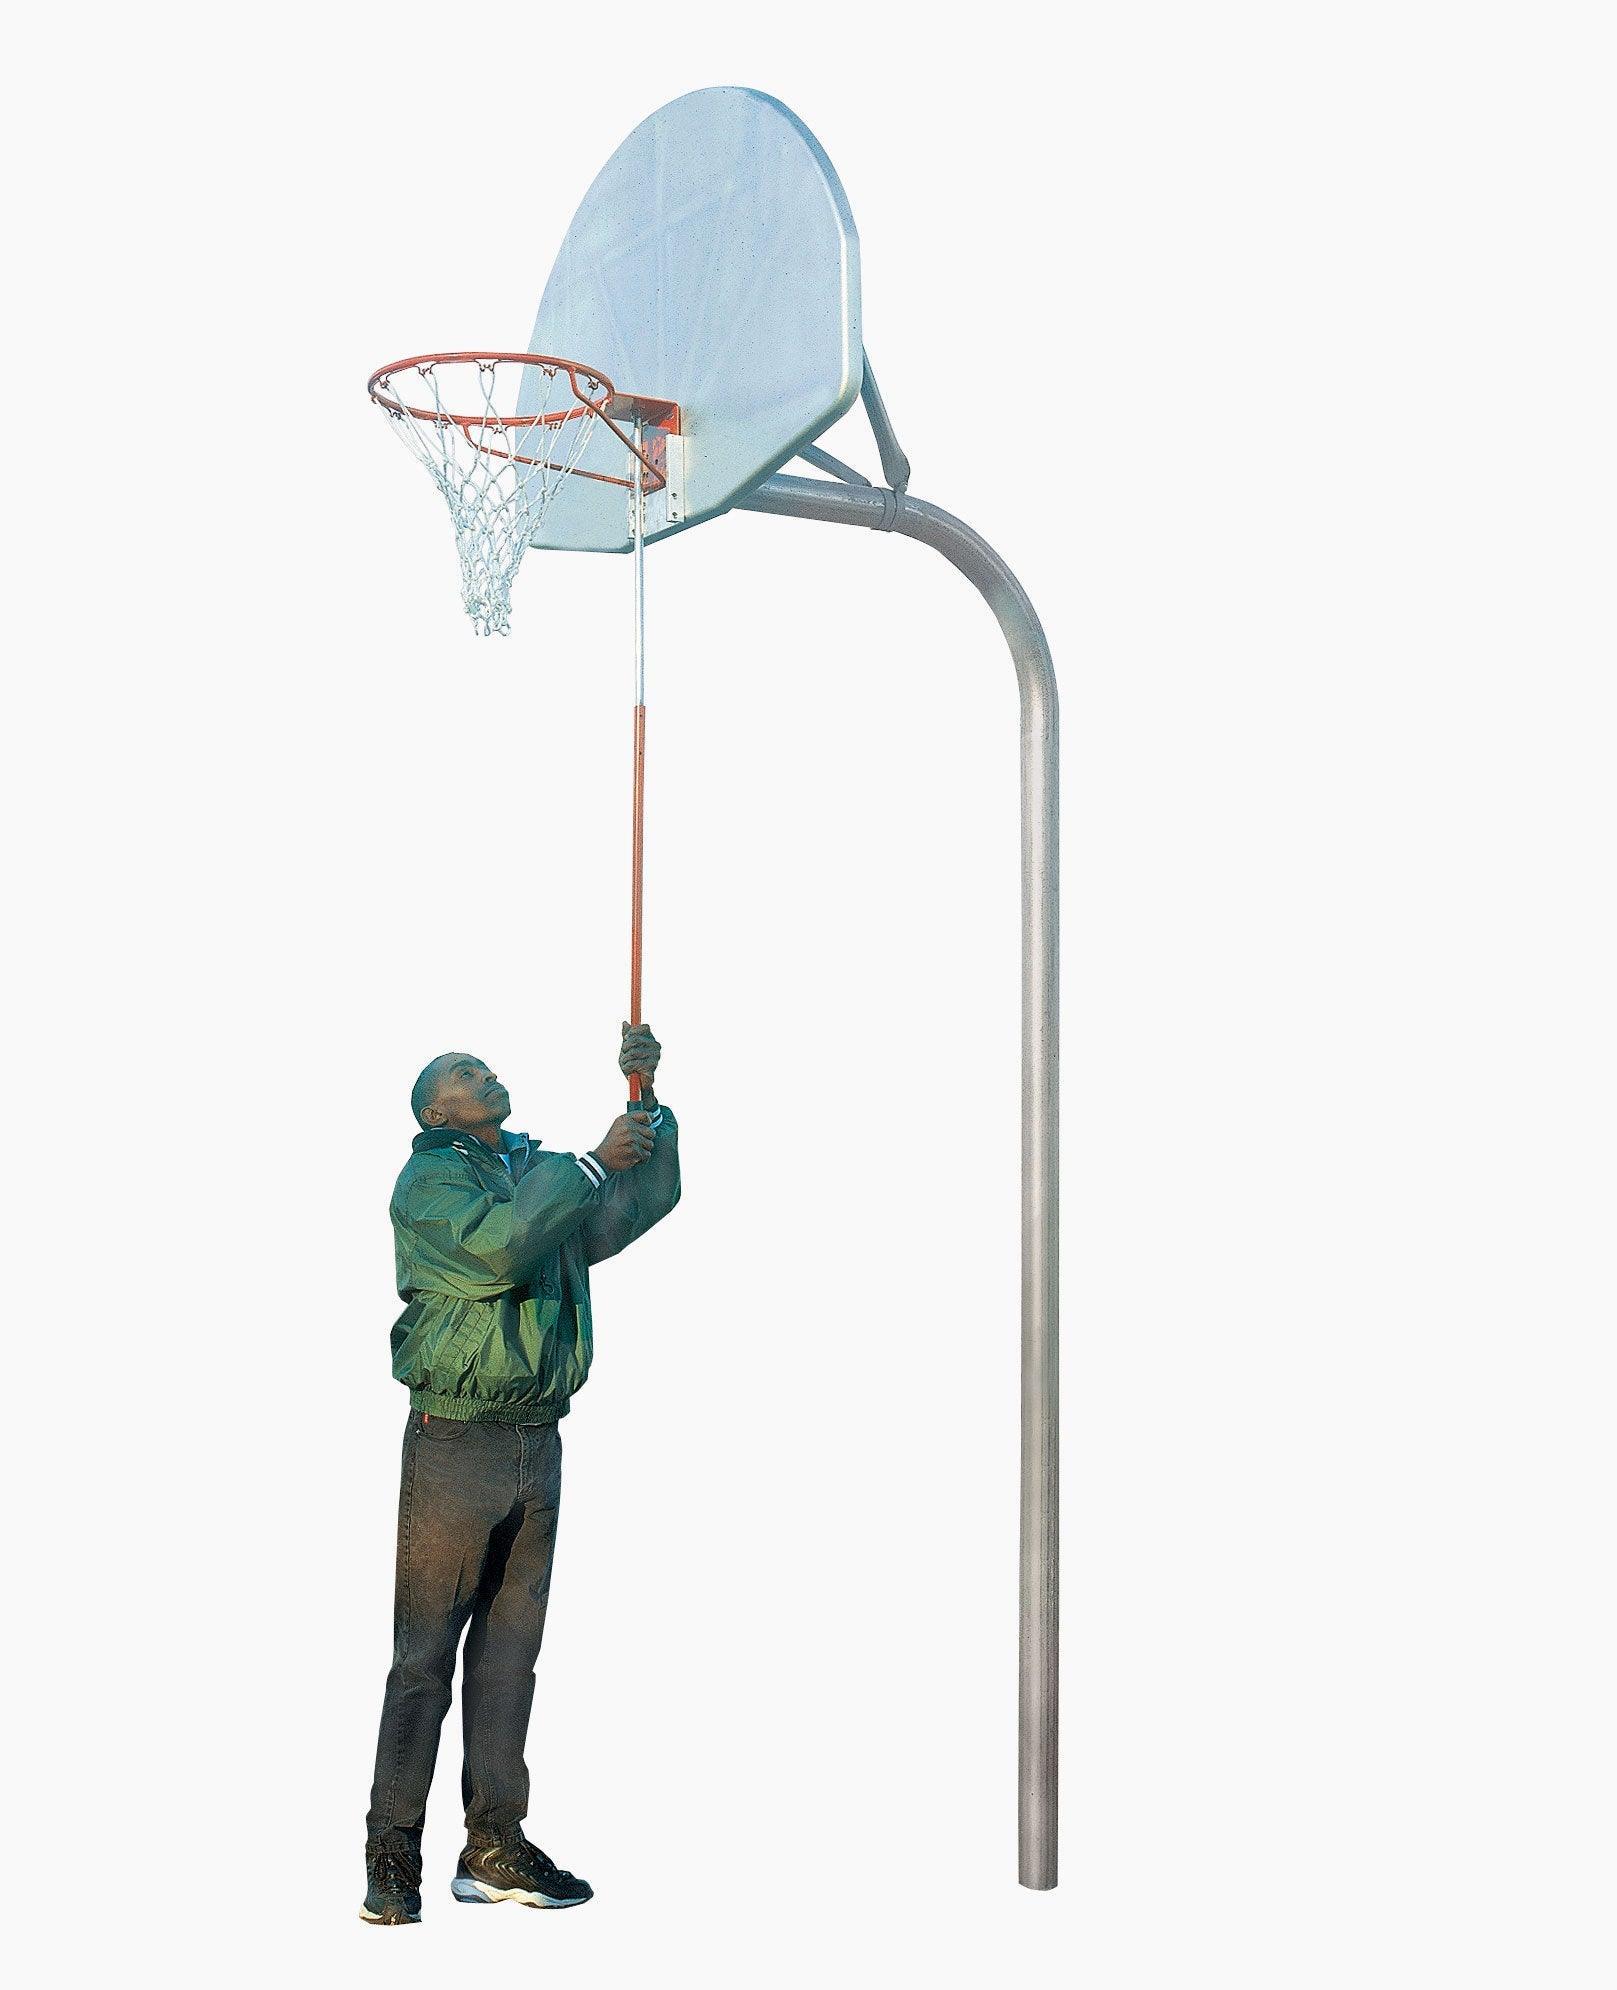 Removable Basketball Goal & Bracket Package